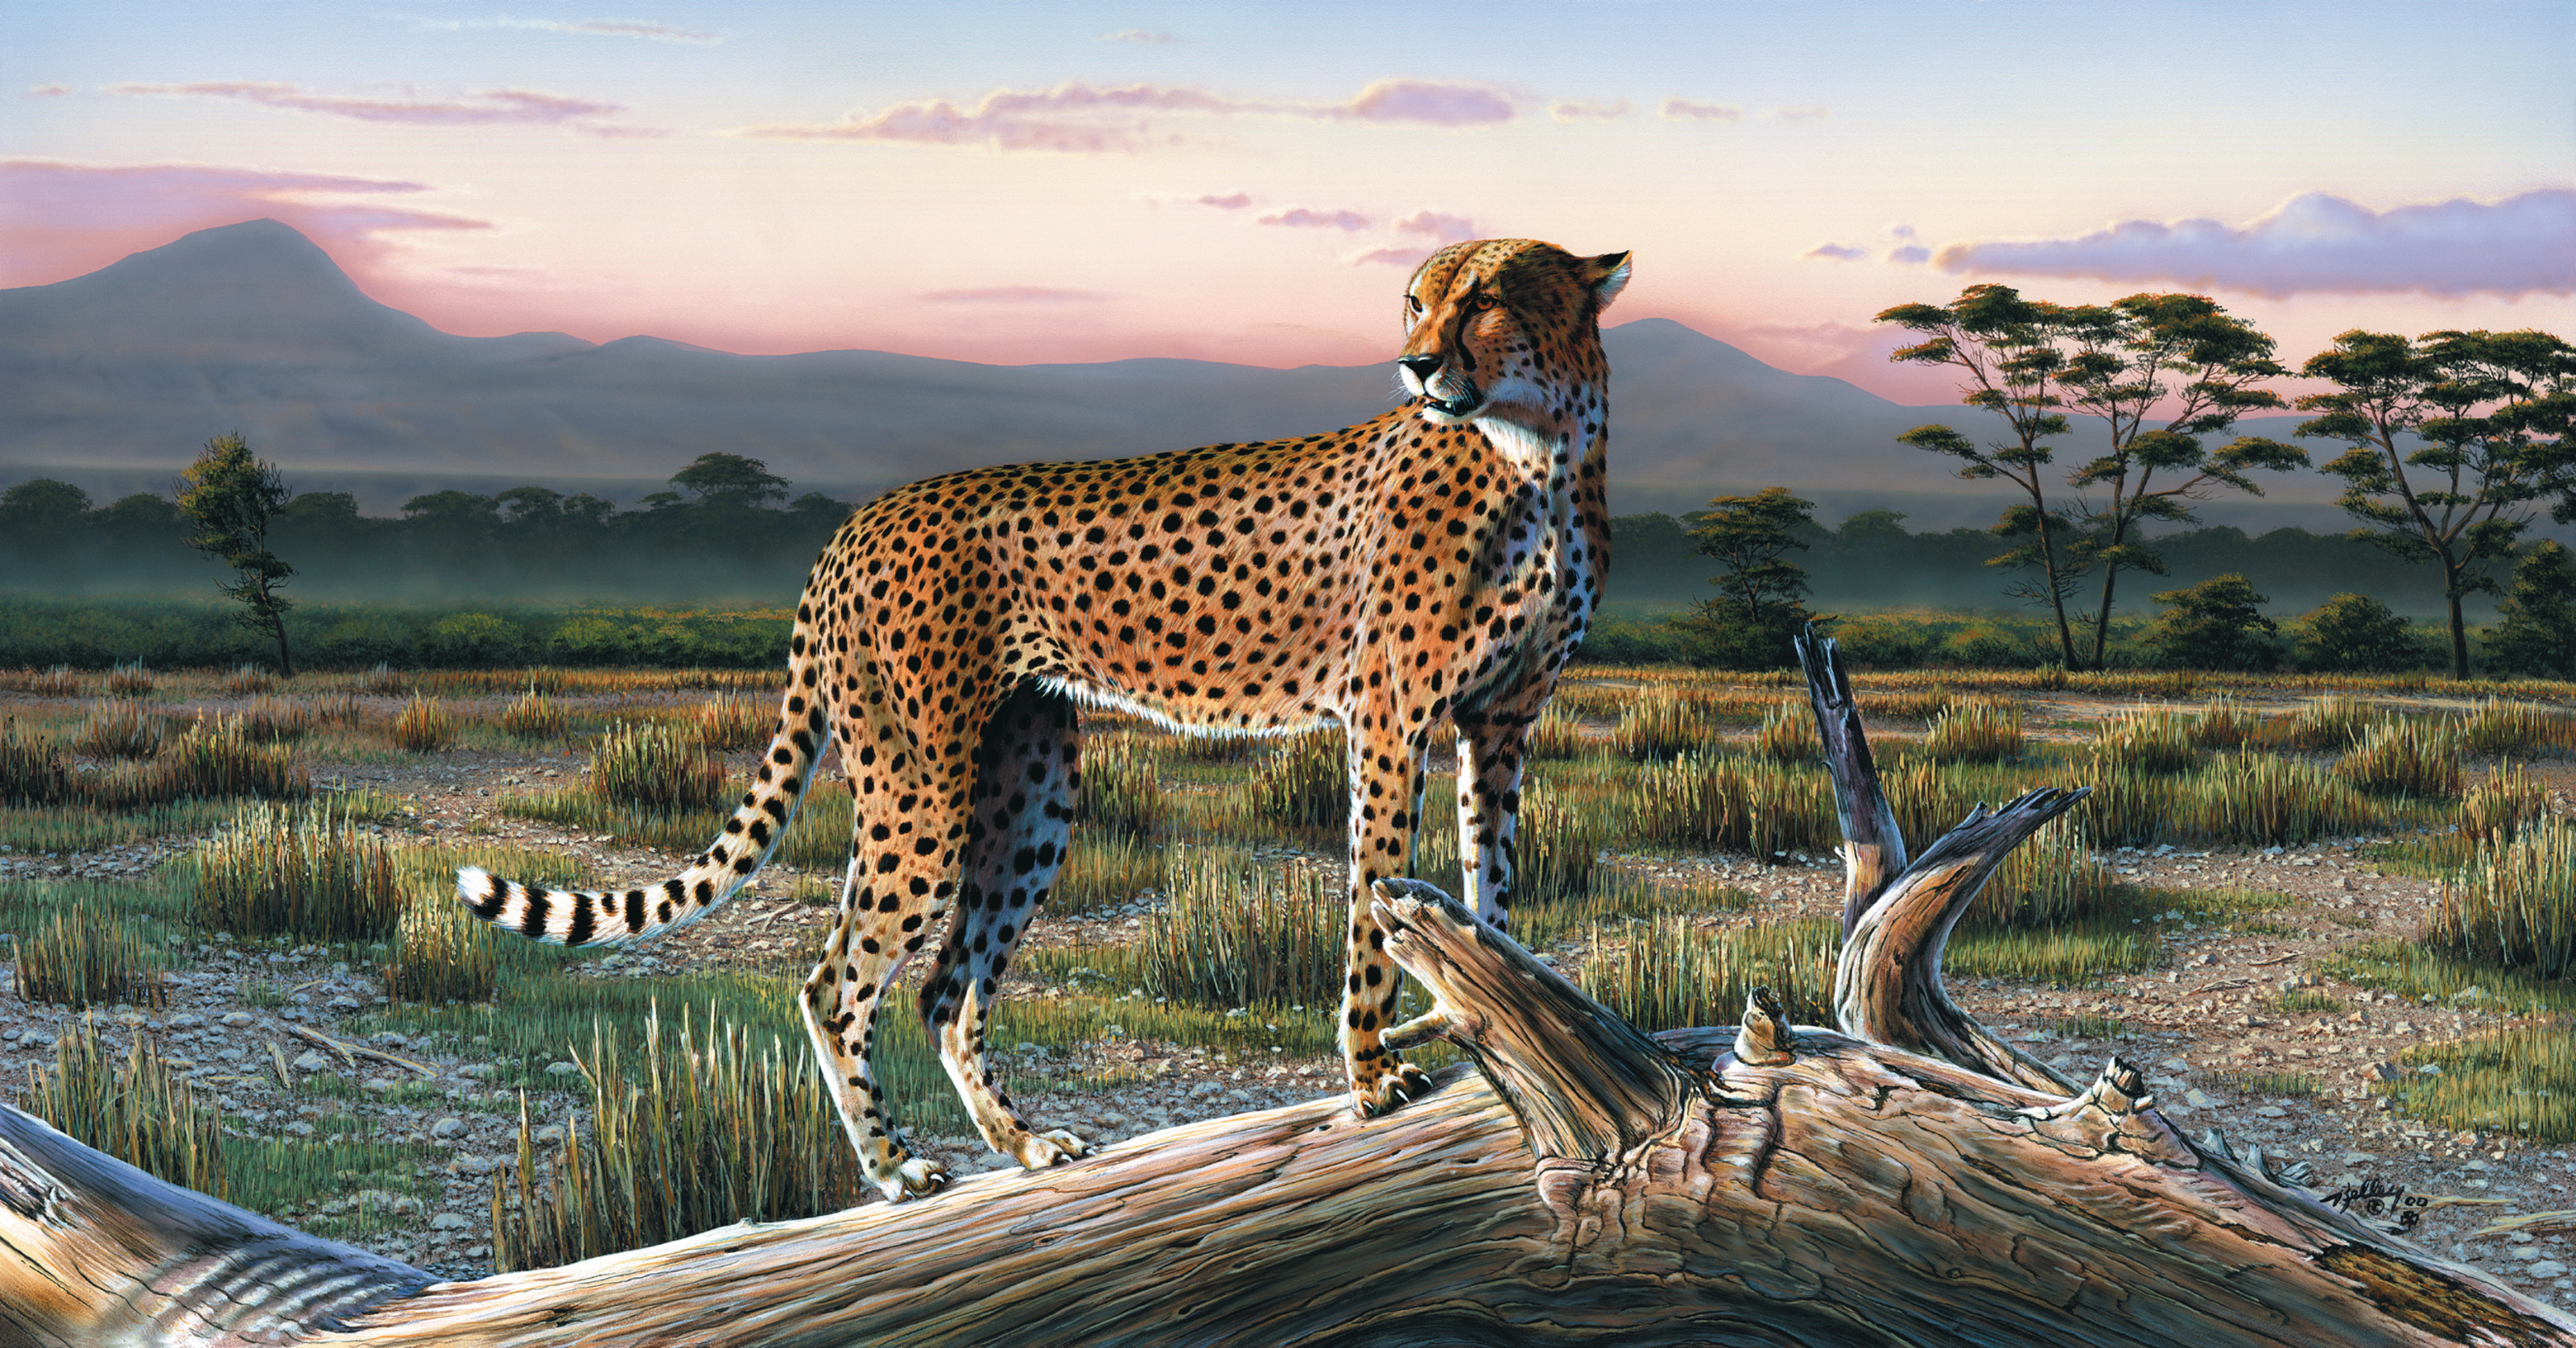 Cheetah Wallpaper Mural By Rick Kelley - Murals Your Way